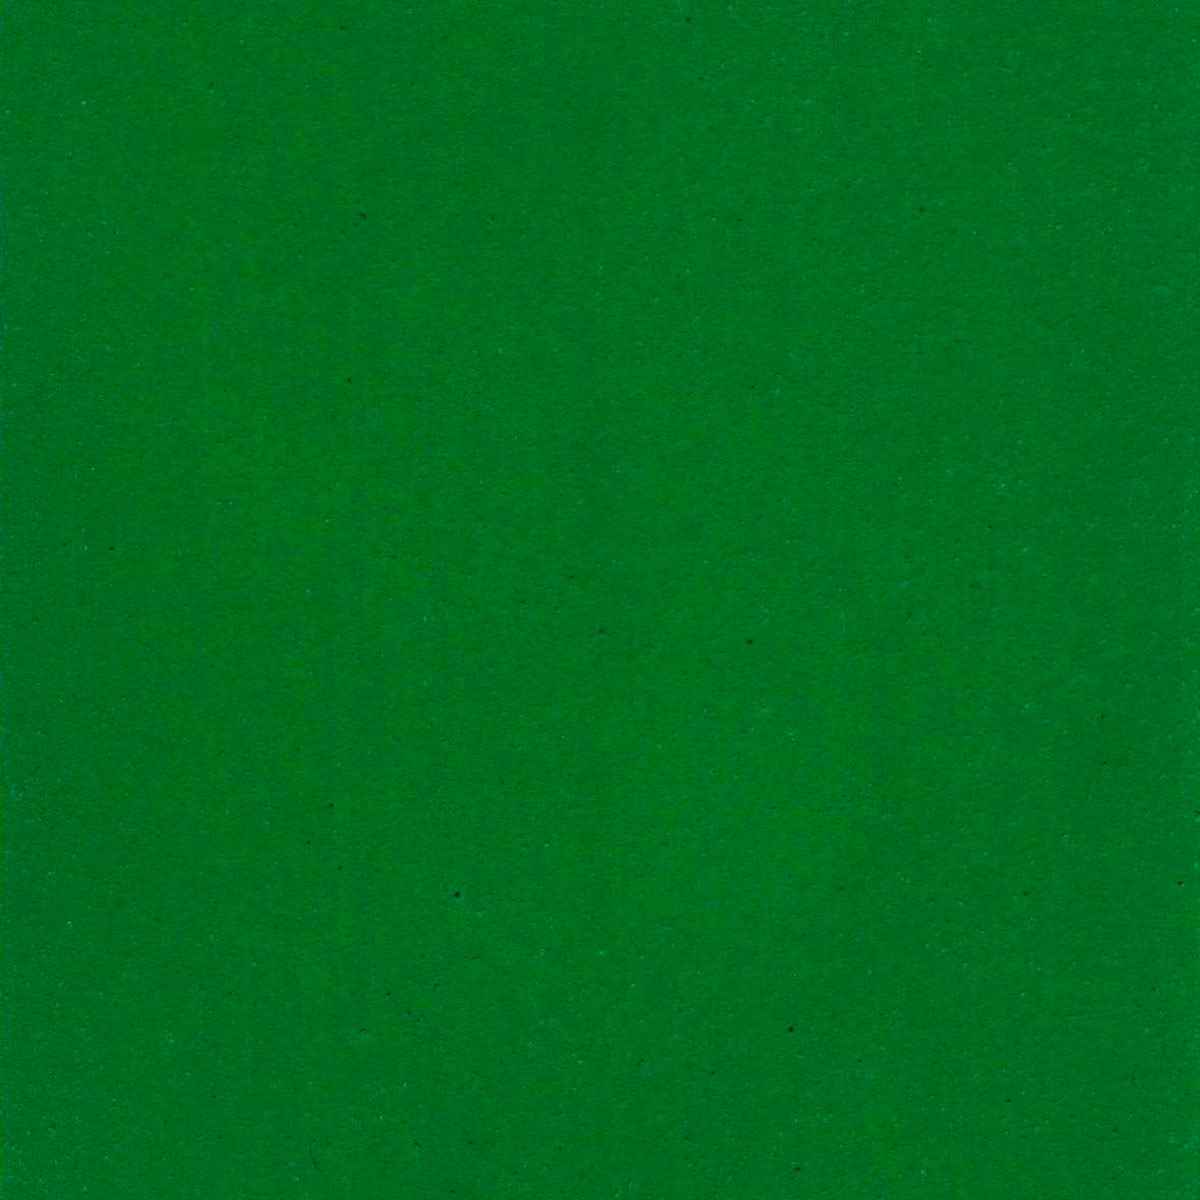 Emerald green - ColourLex